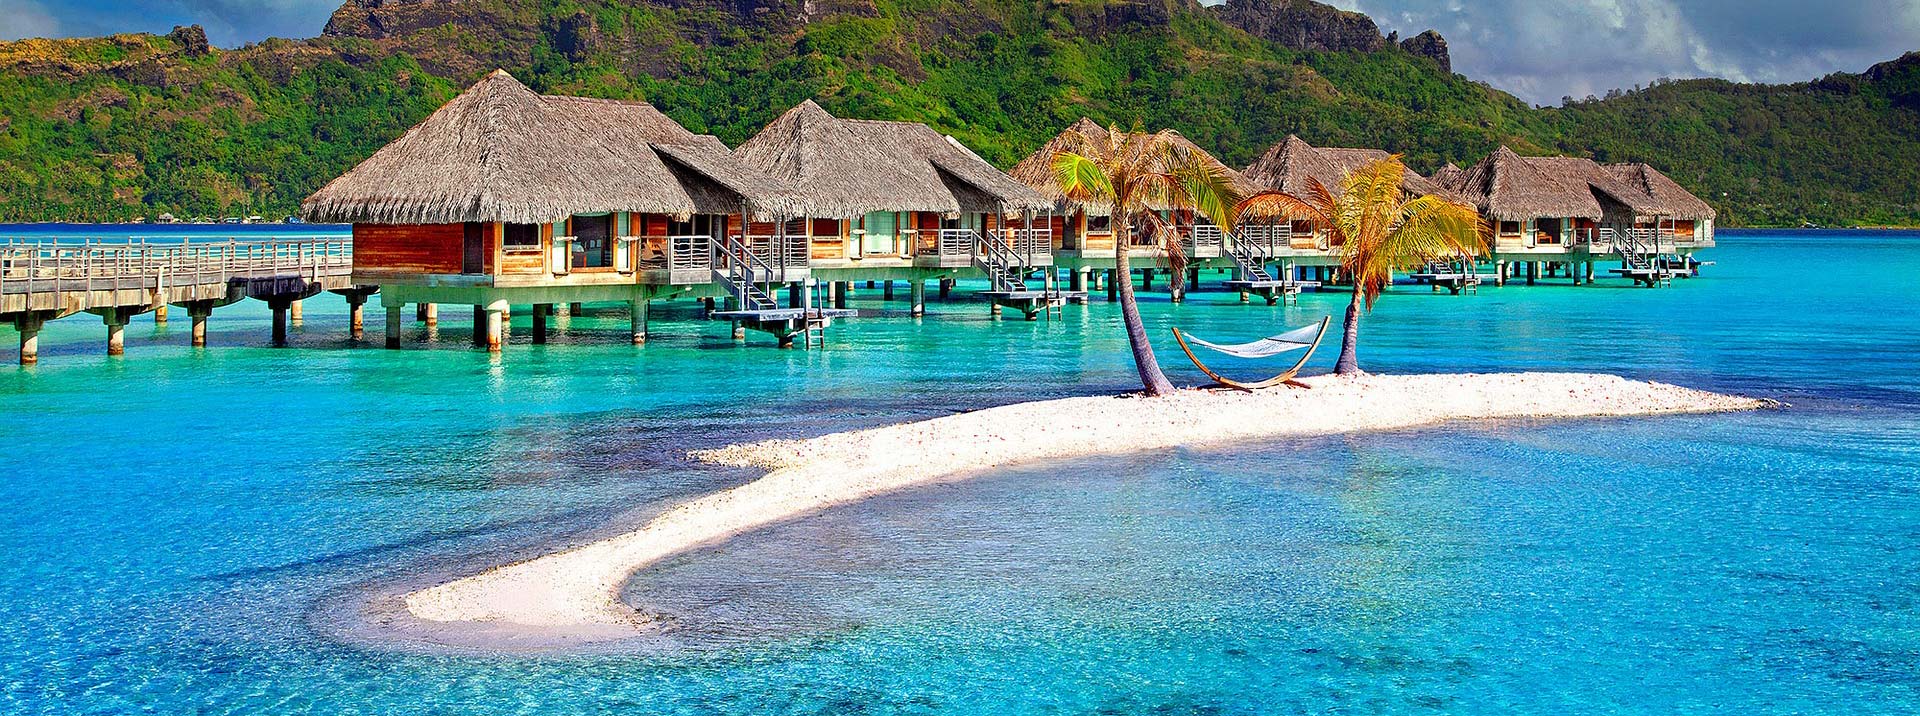 Discounted flight tickets to Bora Bora from Sydney - IFlyFirstClass